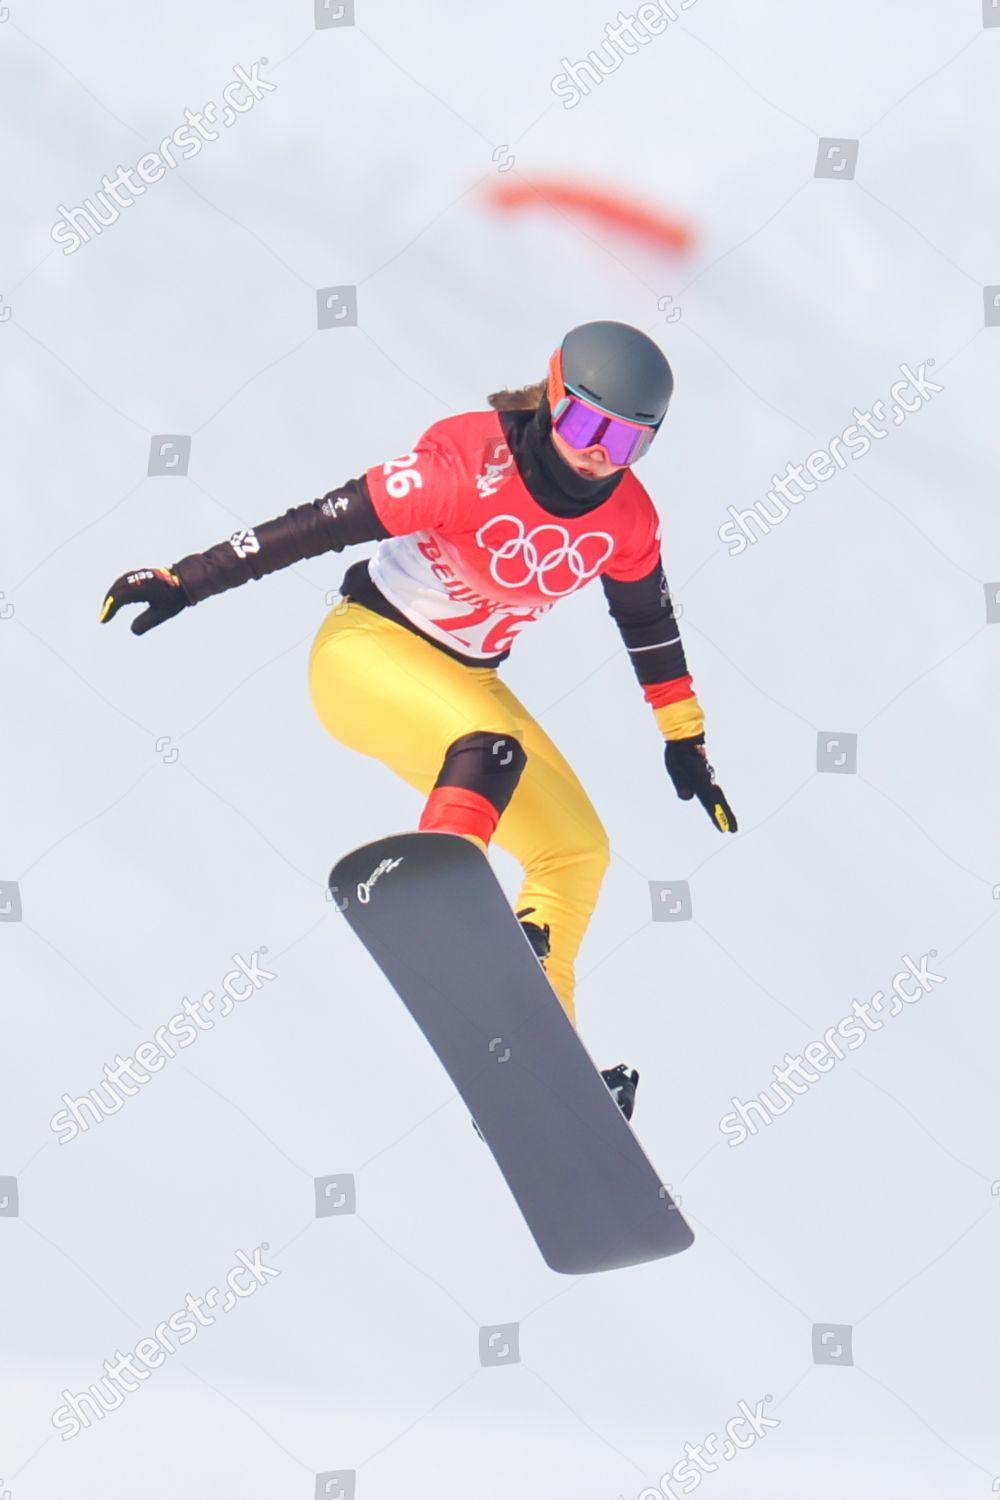 Ger Snowboarding Womens Editorial Stock Photo Stock Image | Shutterstock